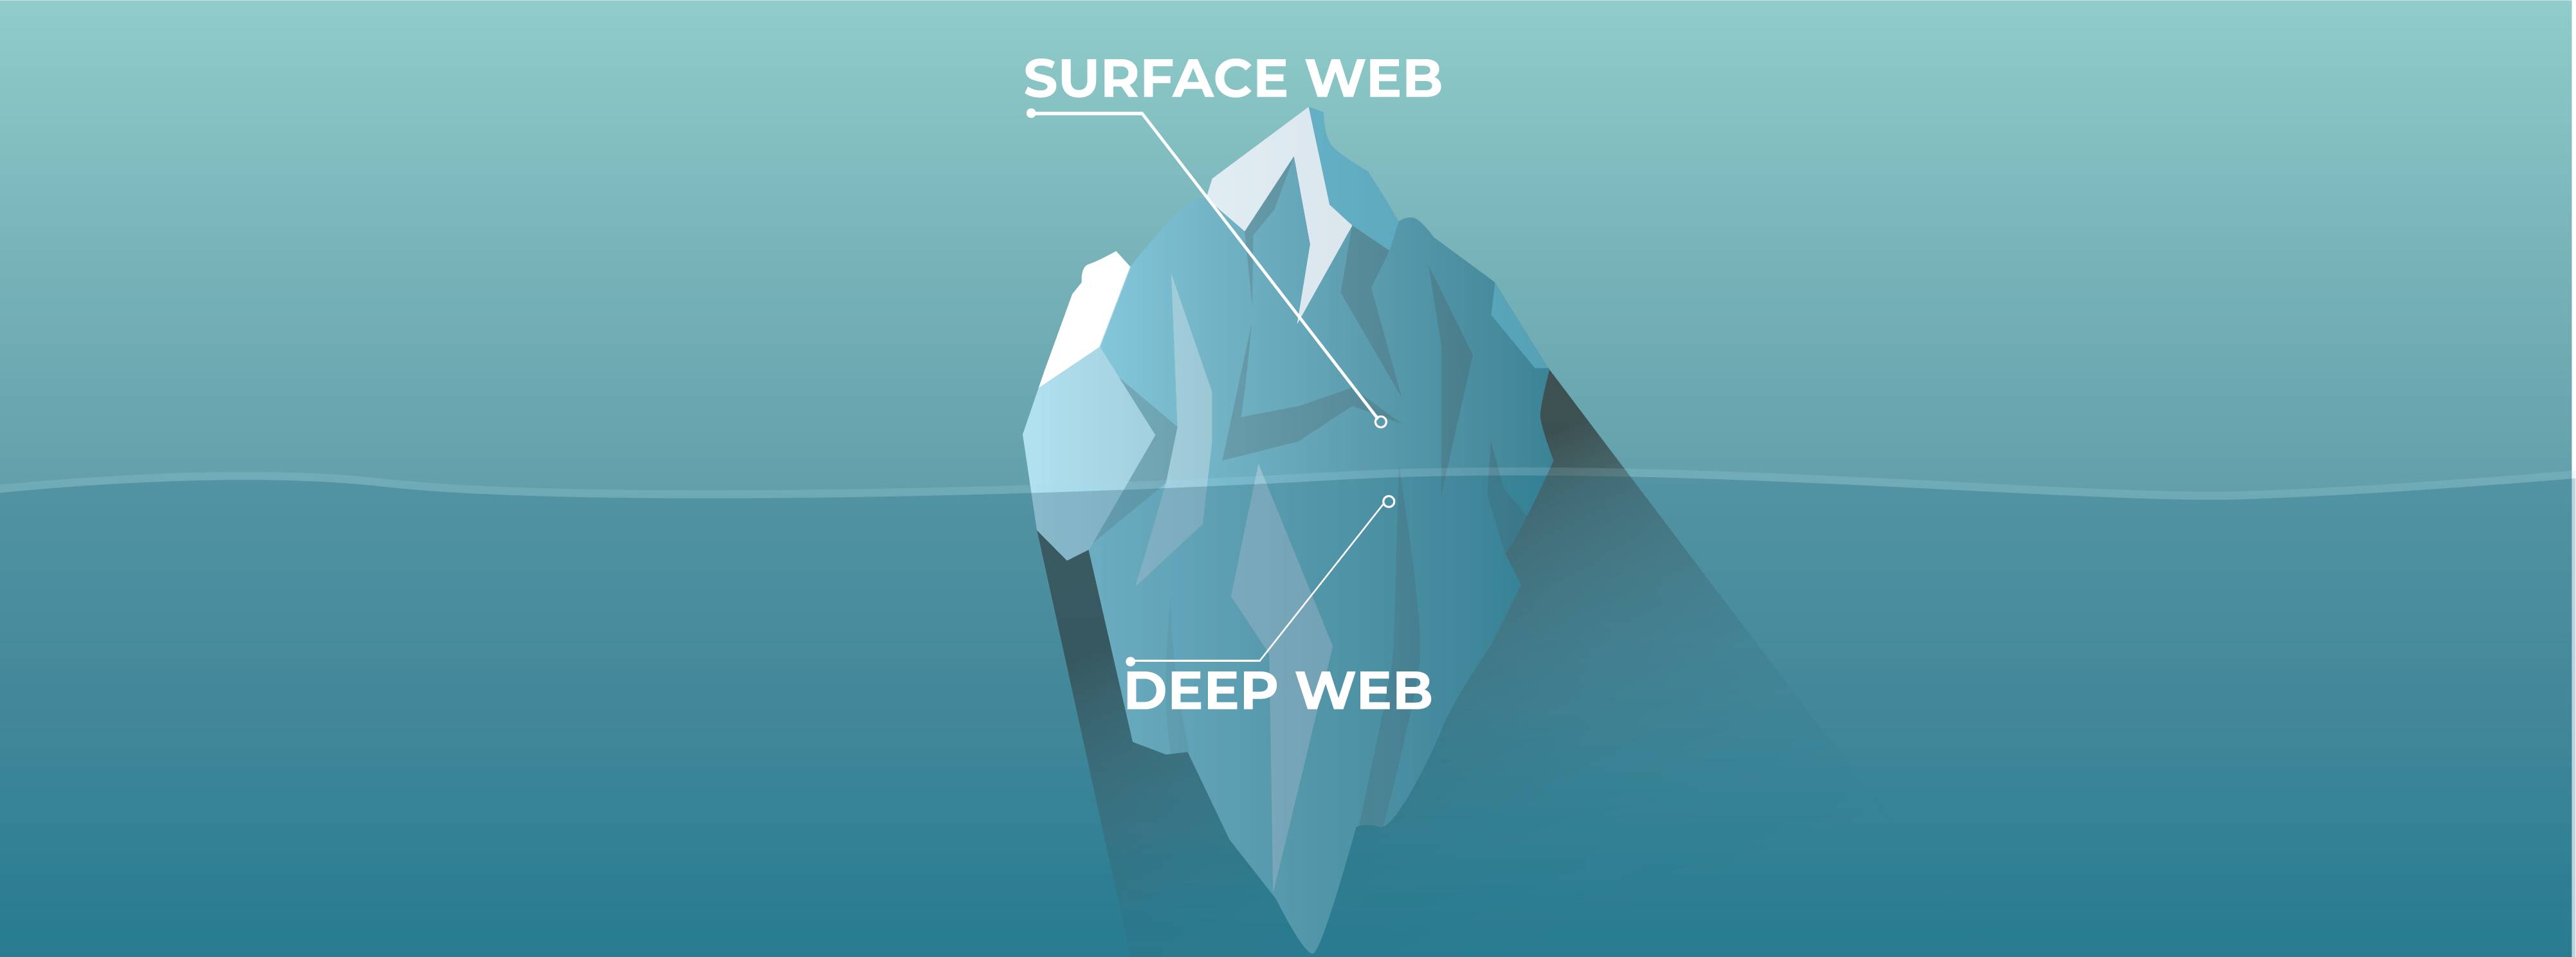 surface web and deep web diagram